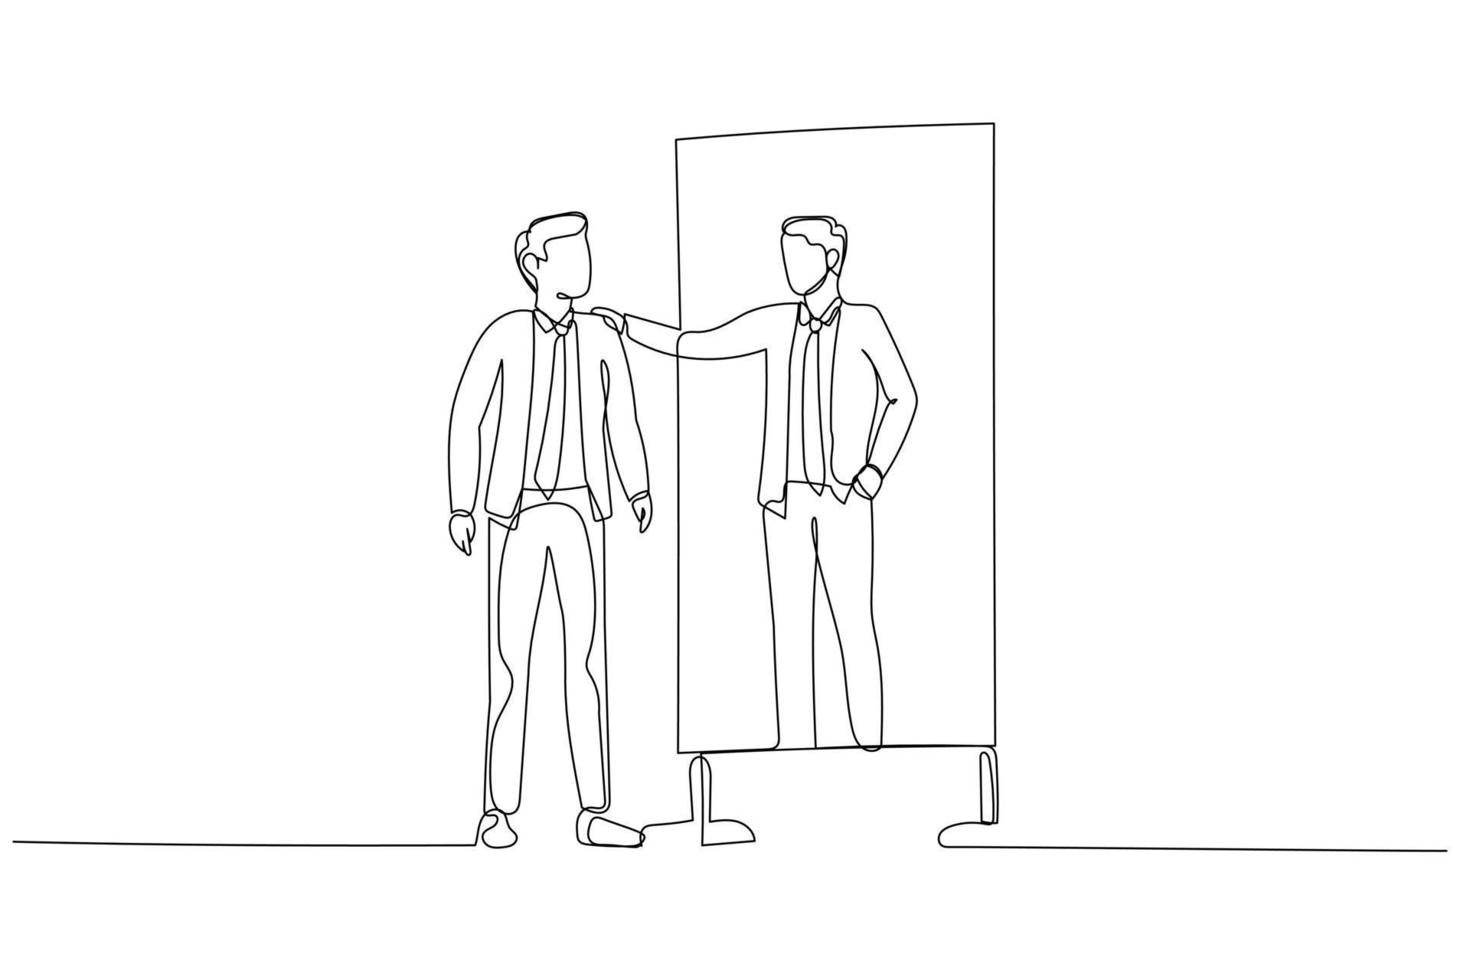 Illustration of businessman looking into mirror embrace self concept of self esteem self care. Single line art style vector